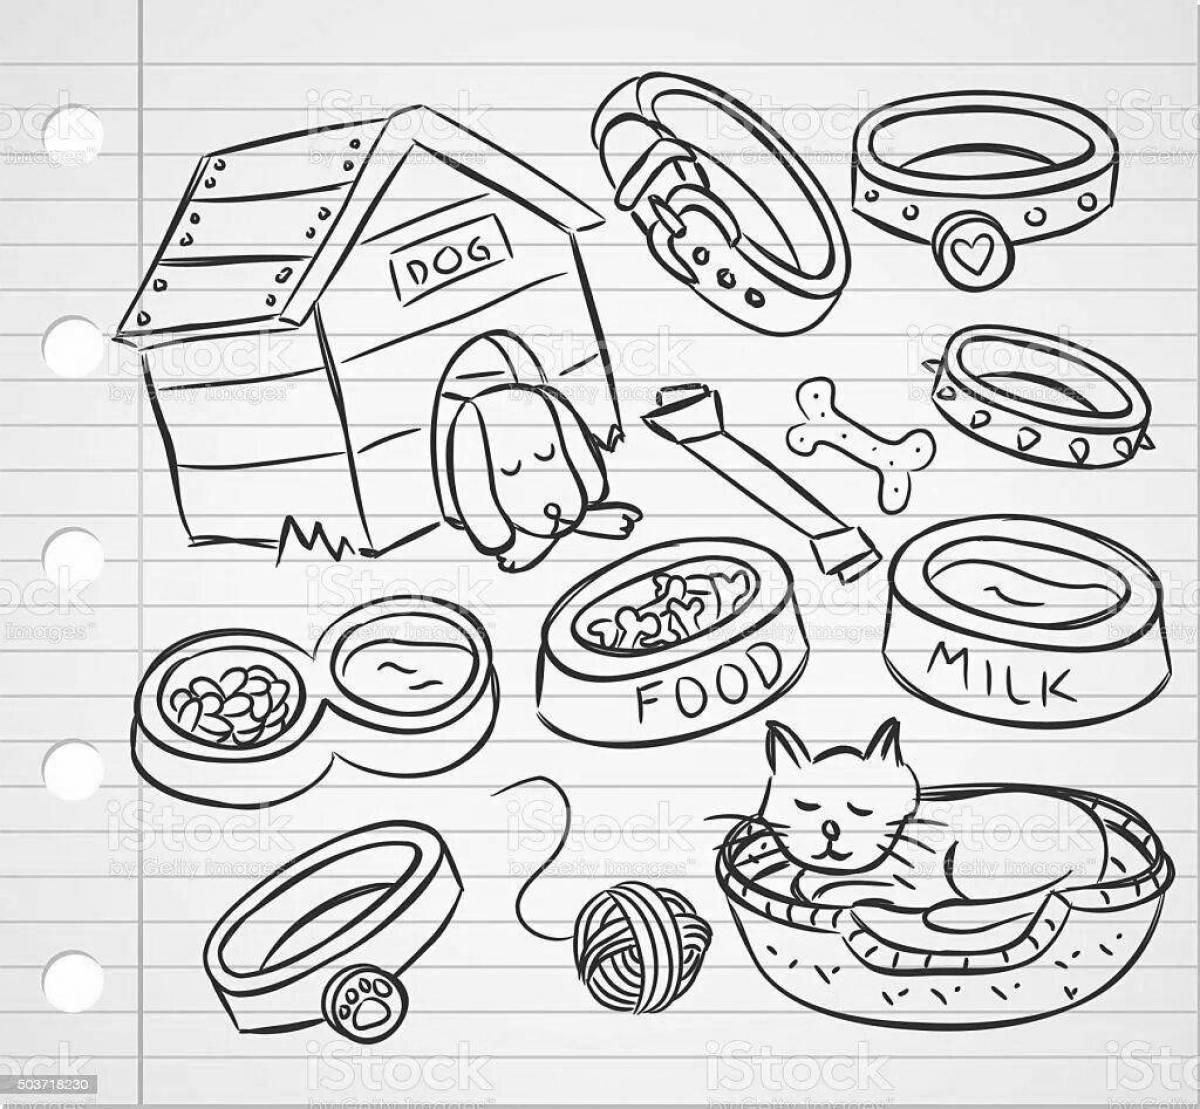 Splendid cat food coloring page